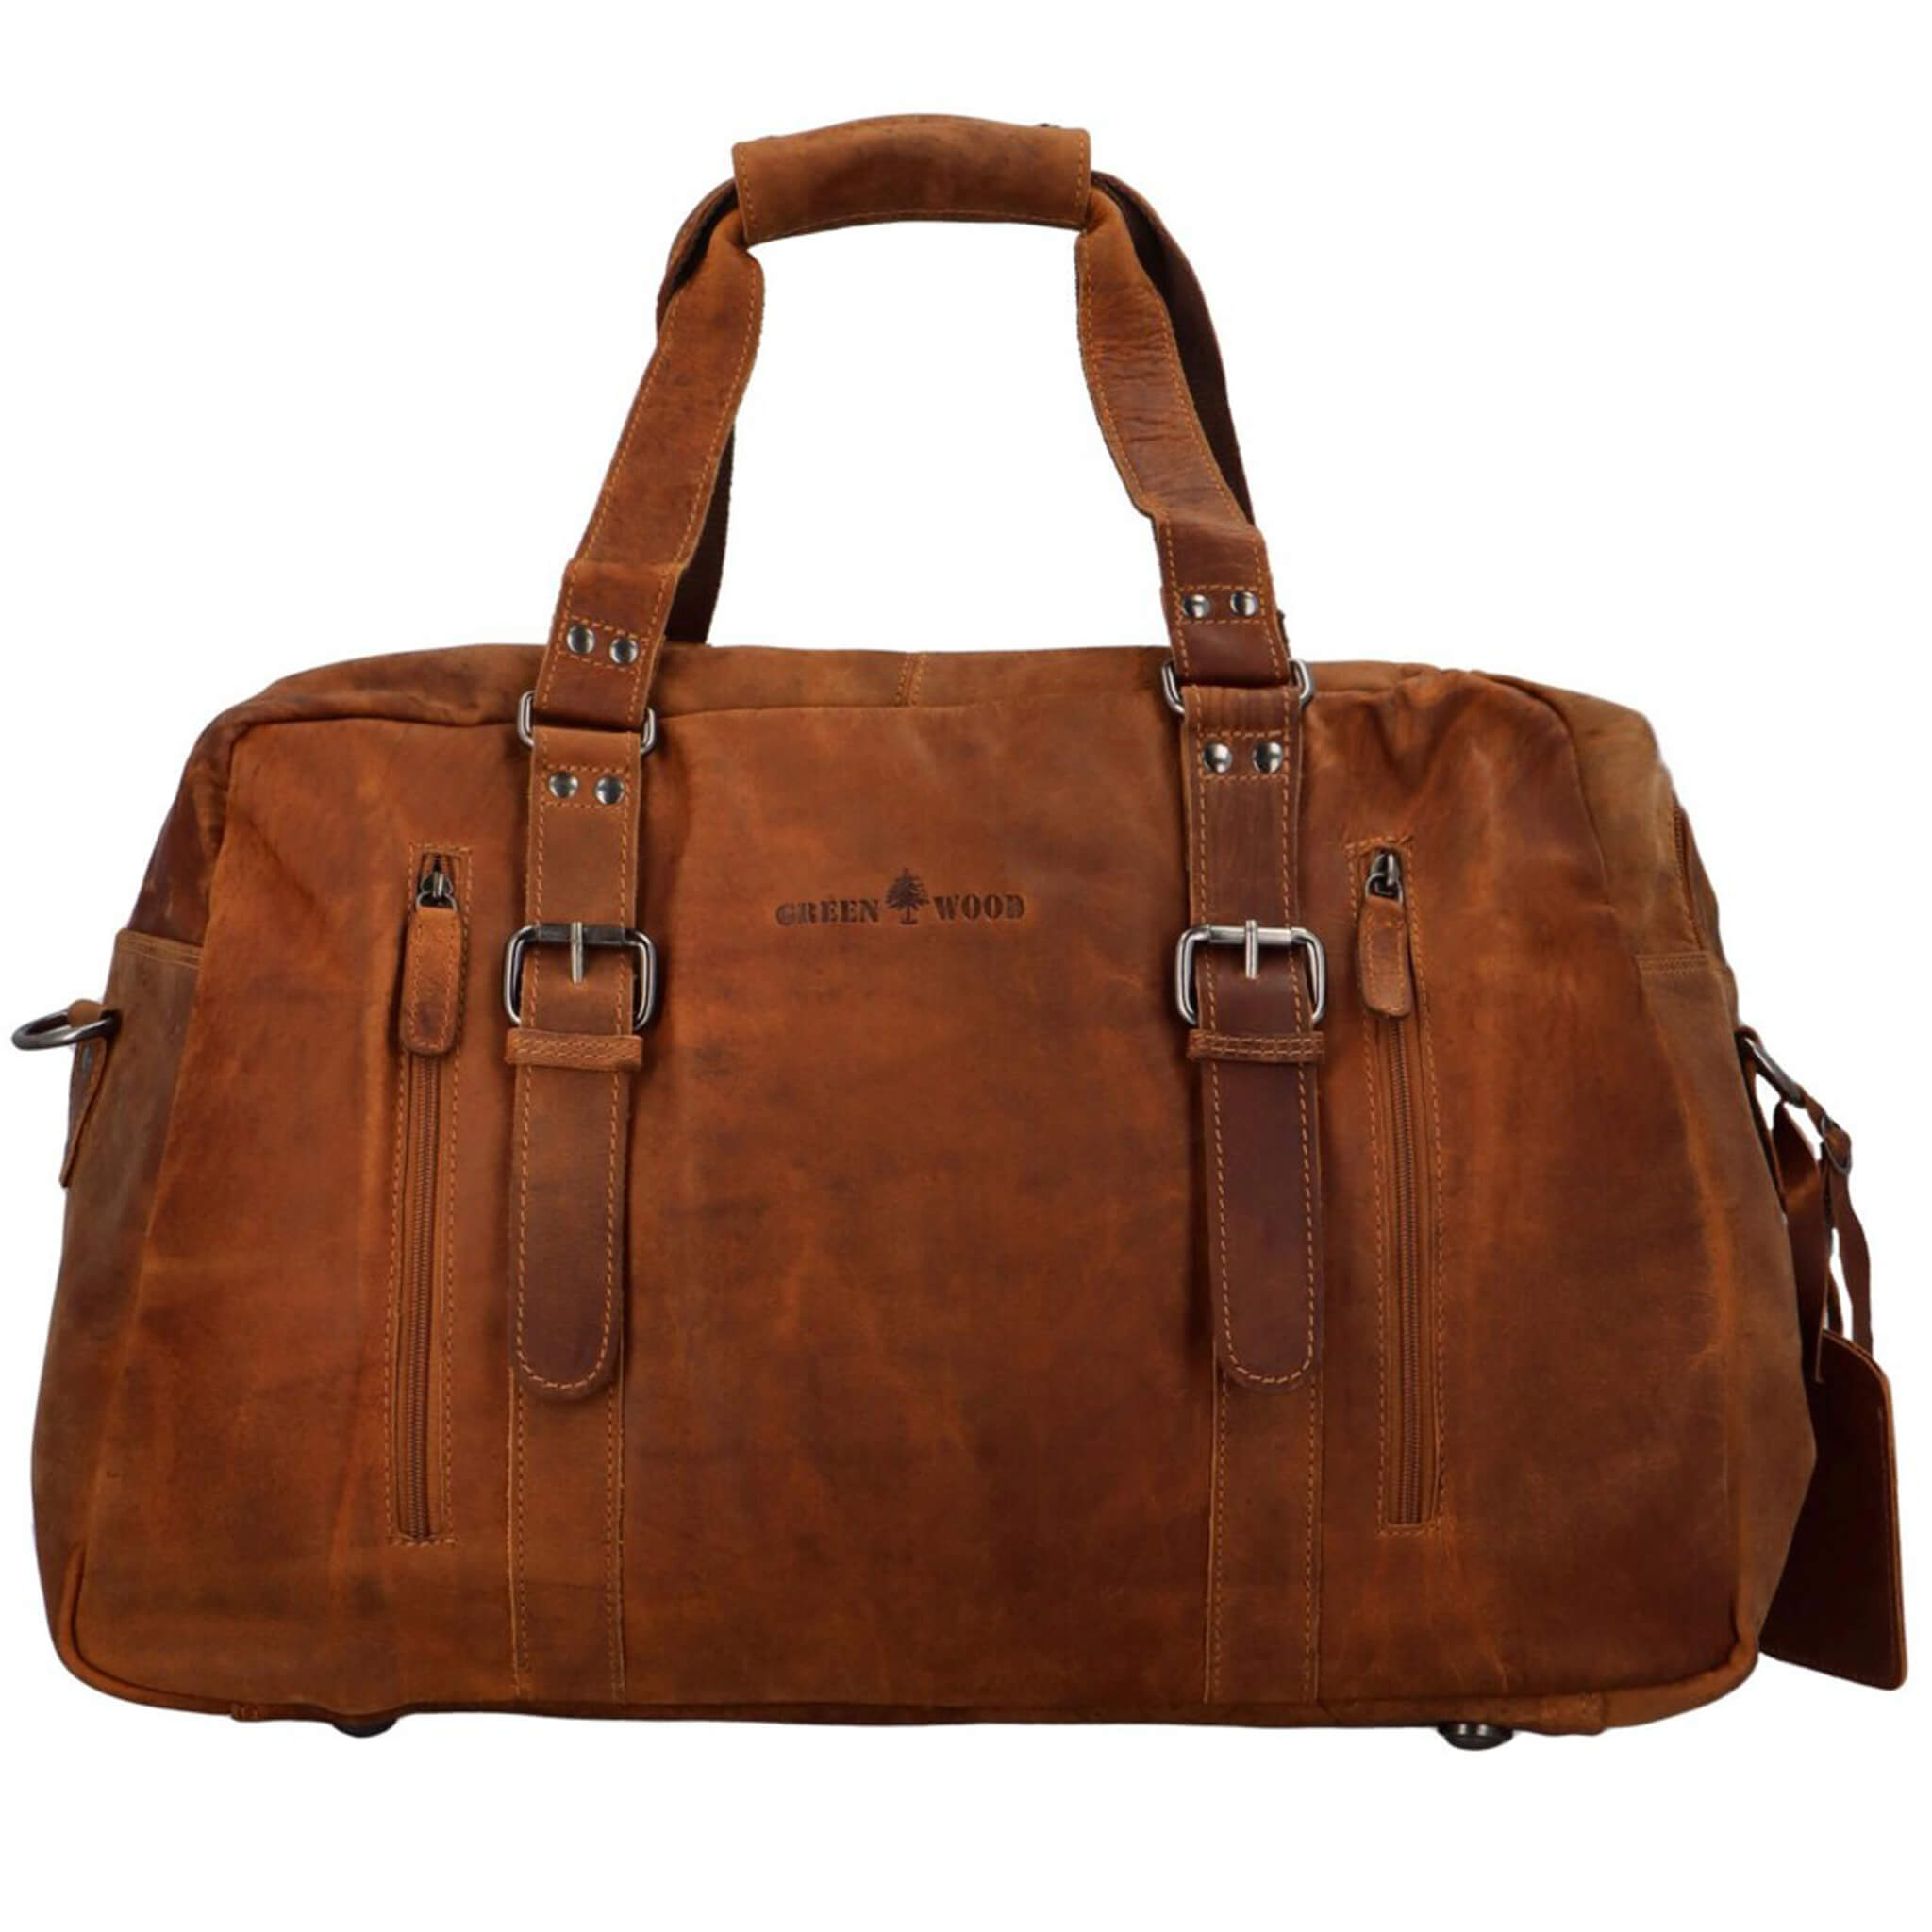 Rudy Leather Weekender Men Duffle Bag Carry-On Luggage Women Vintage